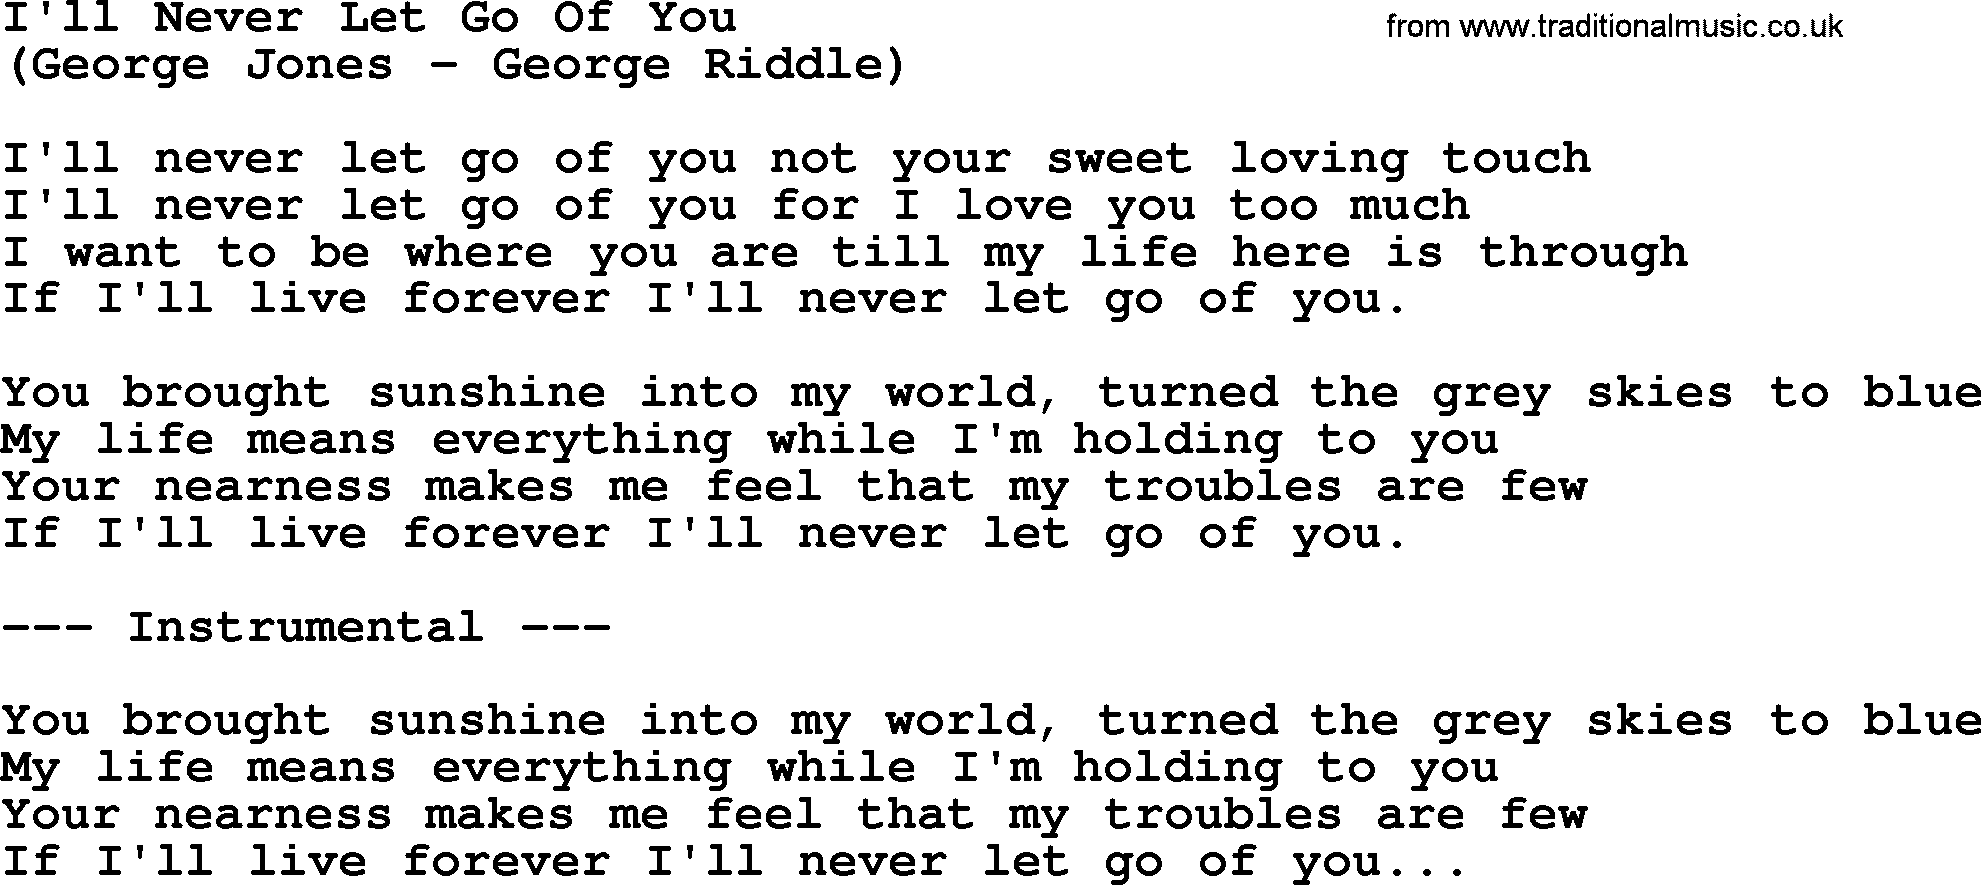 George Jones song: I'll Never Let Go Of You, lyrics